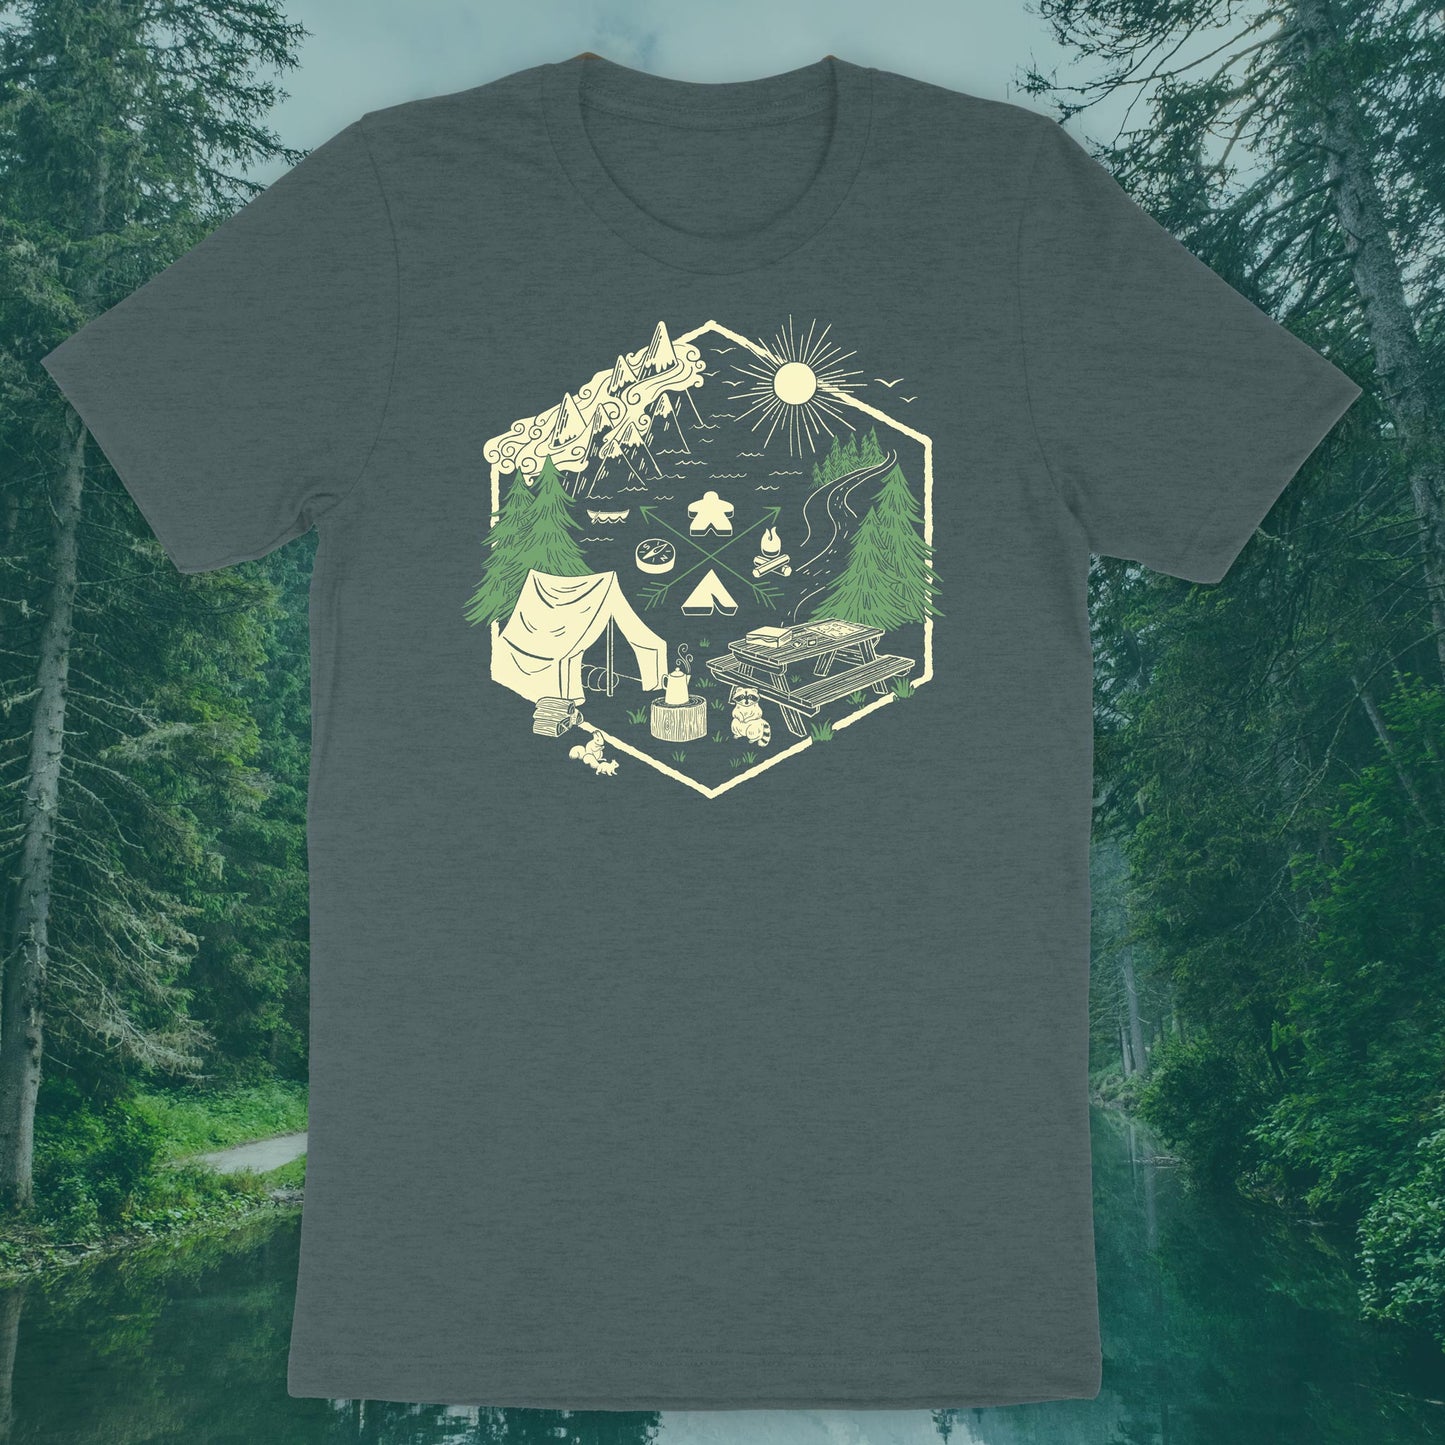 Camping & Board Games - Adult T-Shirt